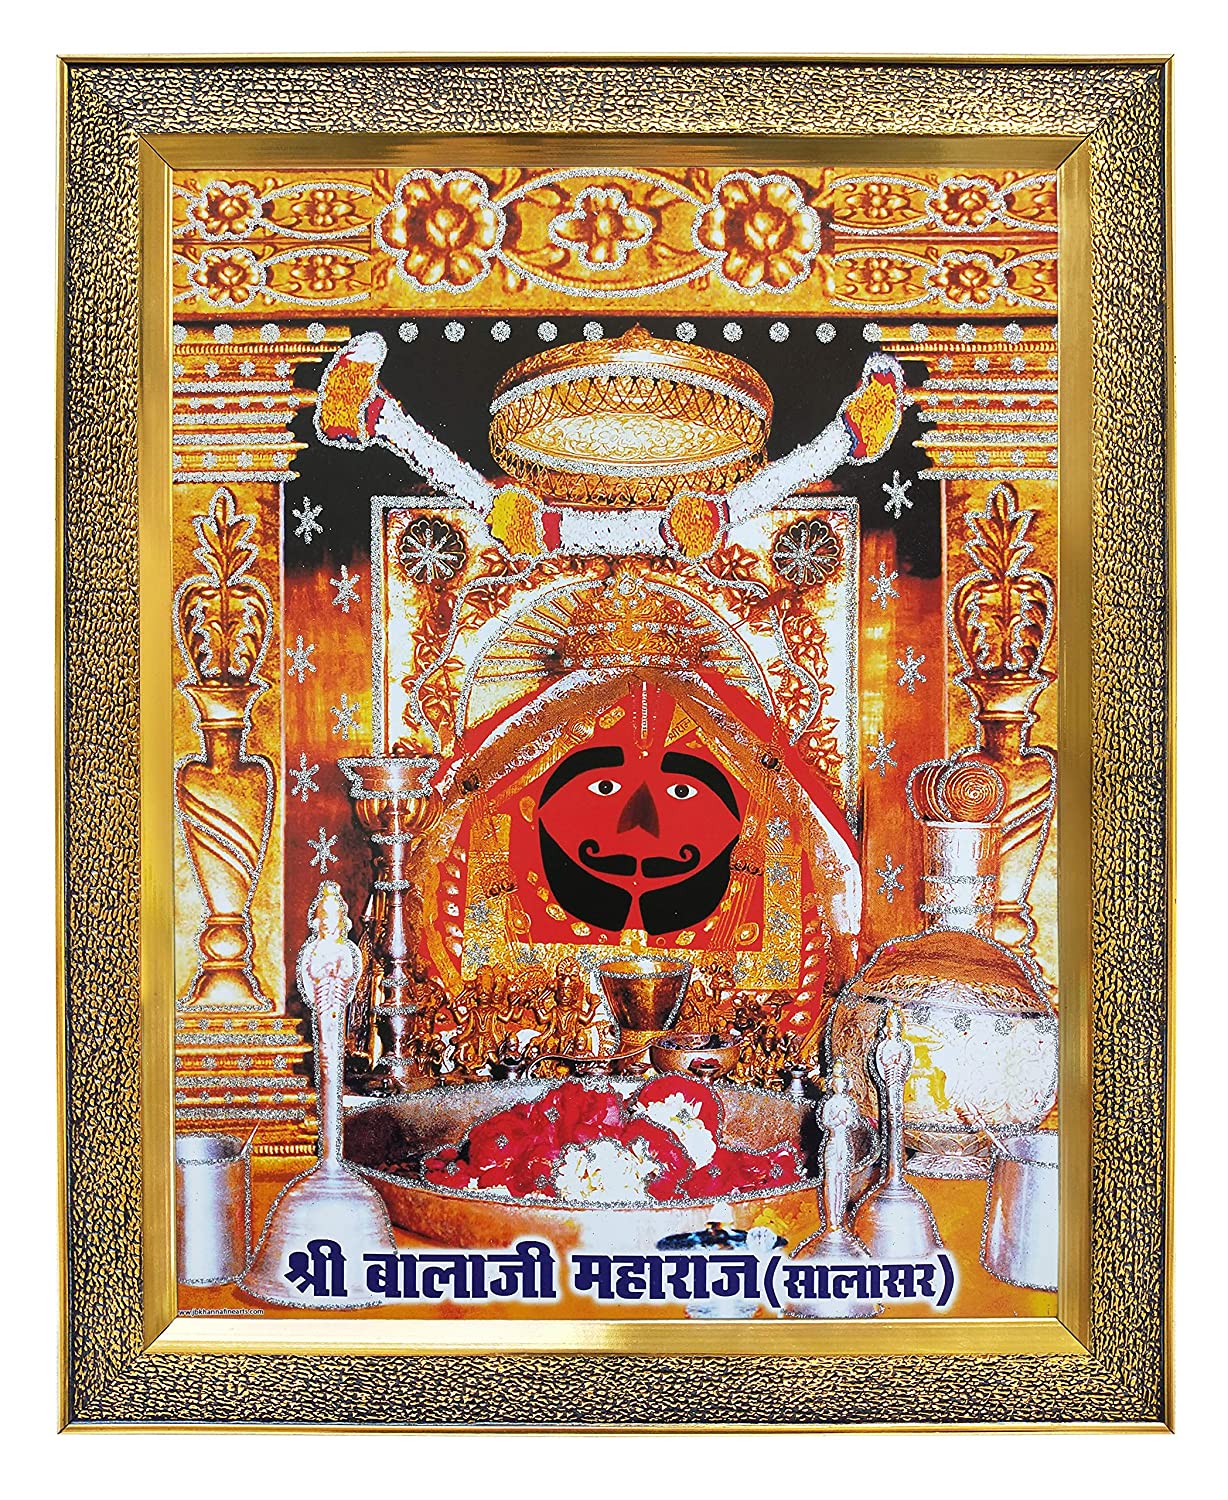 Koshtak Salasar Balaji Dham Hanuman Ji Photo Frame With Unbreakable Glass For Wall Hanging Gift Temple Puja Room Home Decor And Worship, Amazon.in: Home & Kitchen